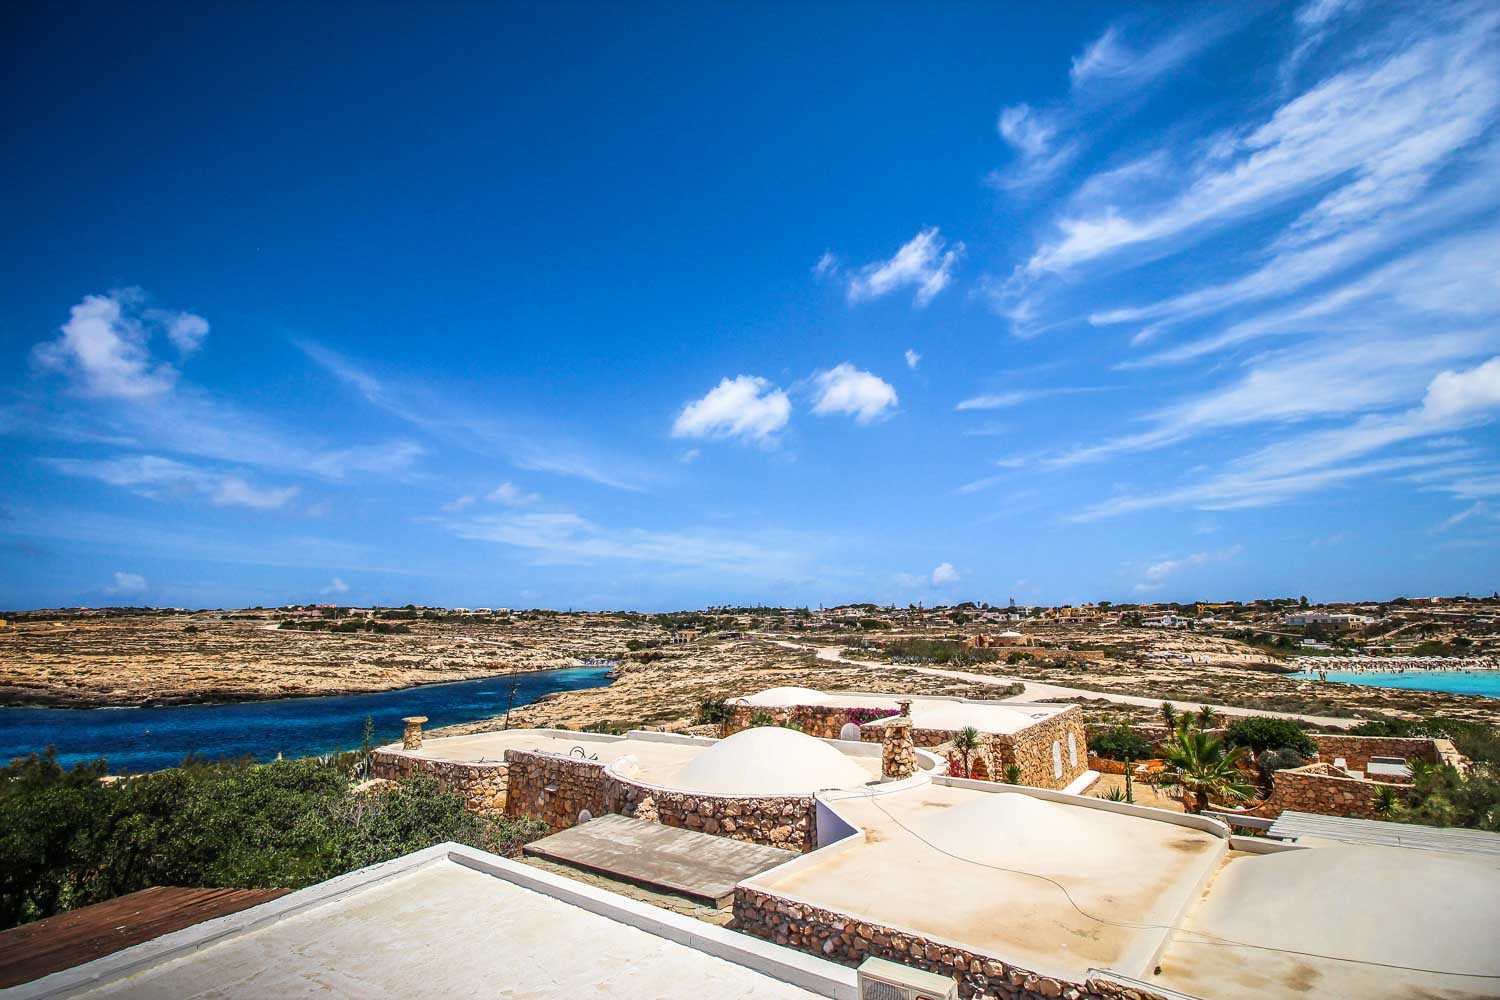 Calamadonna Club Hotel & Resort in Lampedusa